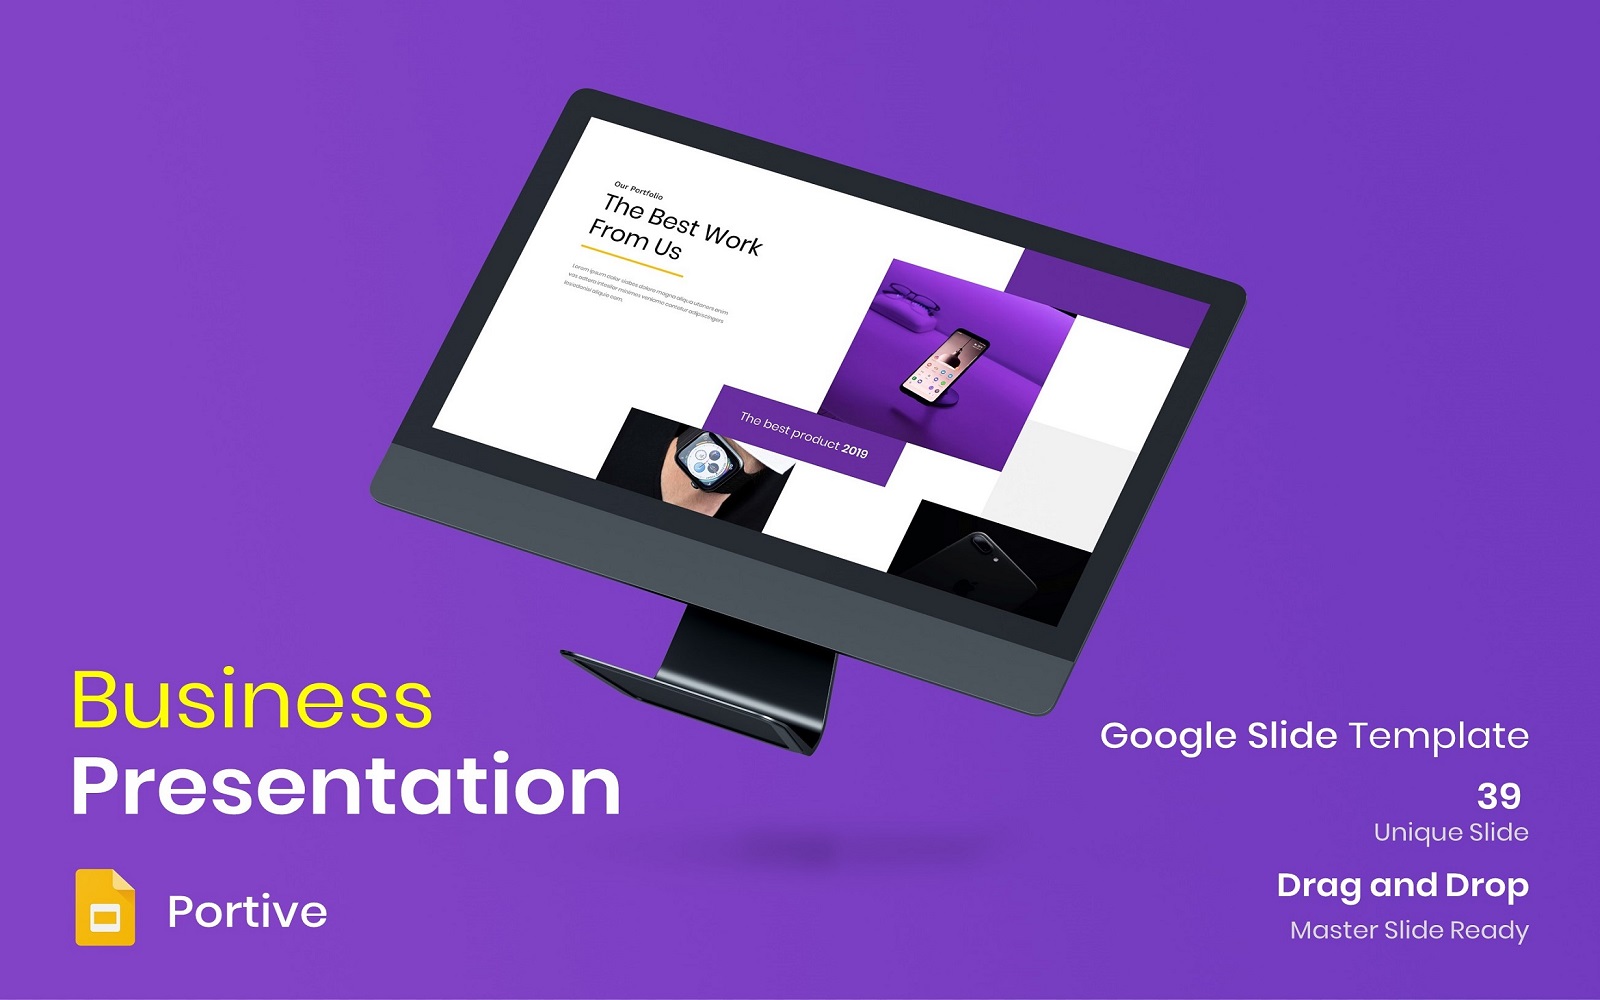 Portive - Business Google Slide Template